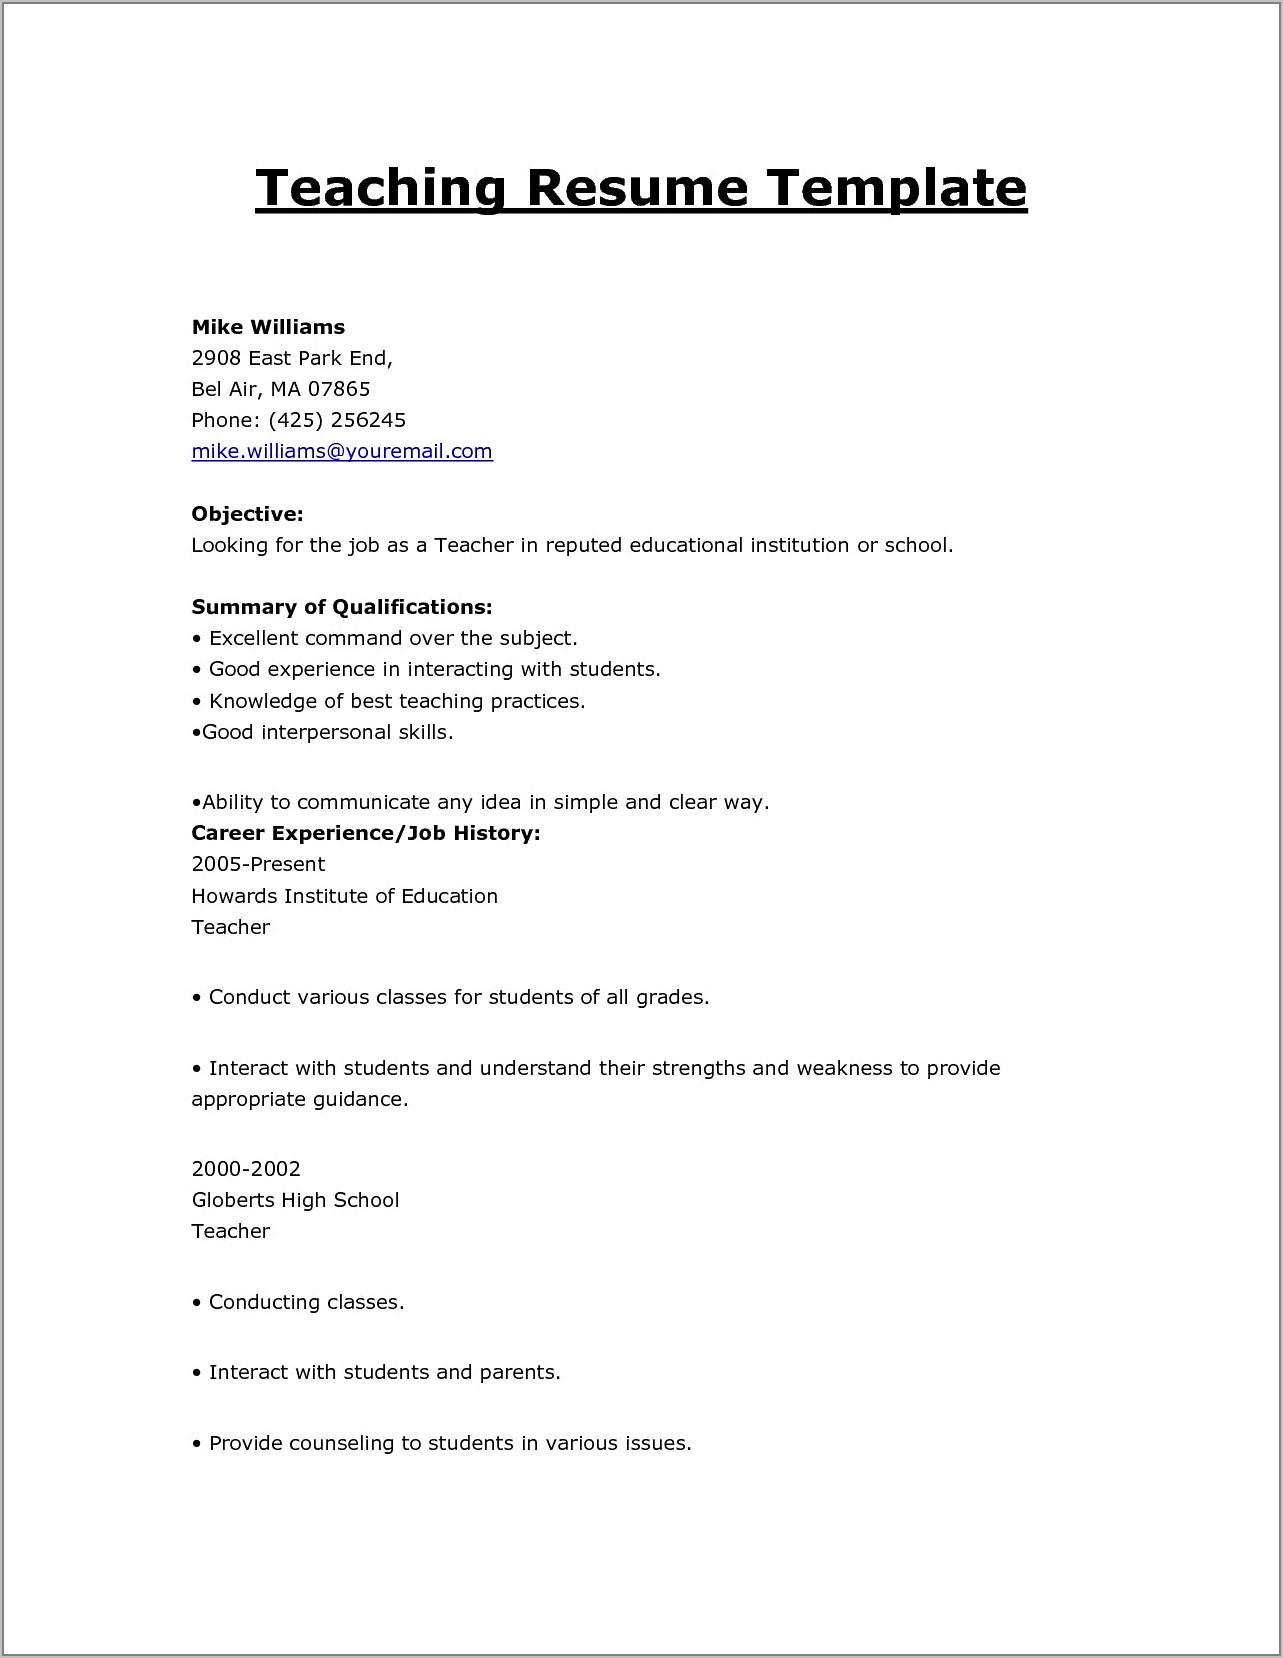 Resume Format For Teachers Template